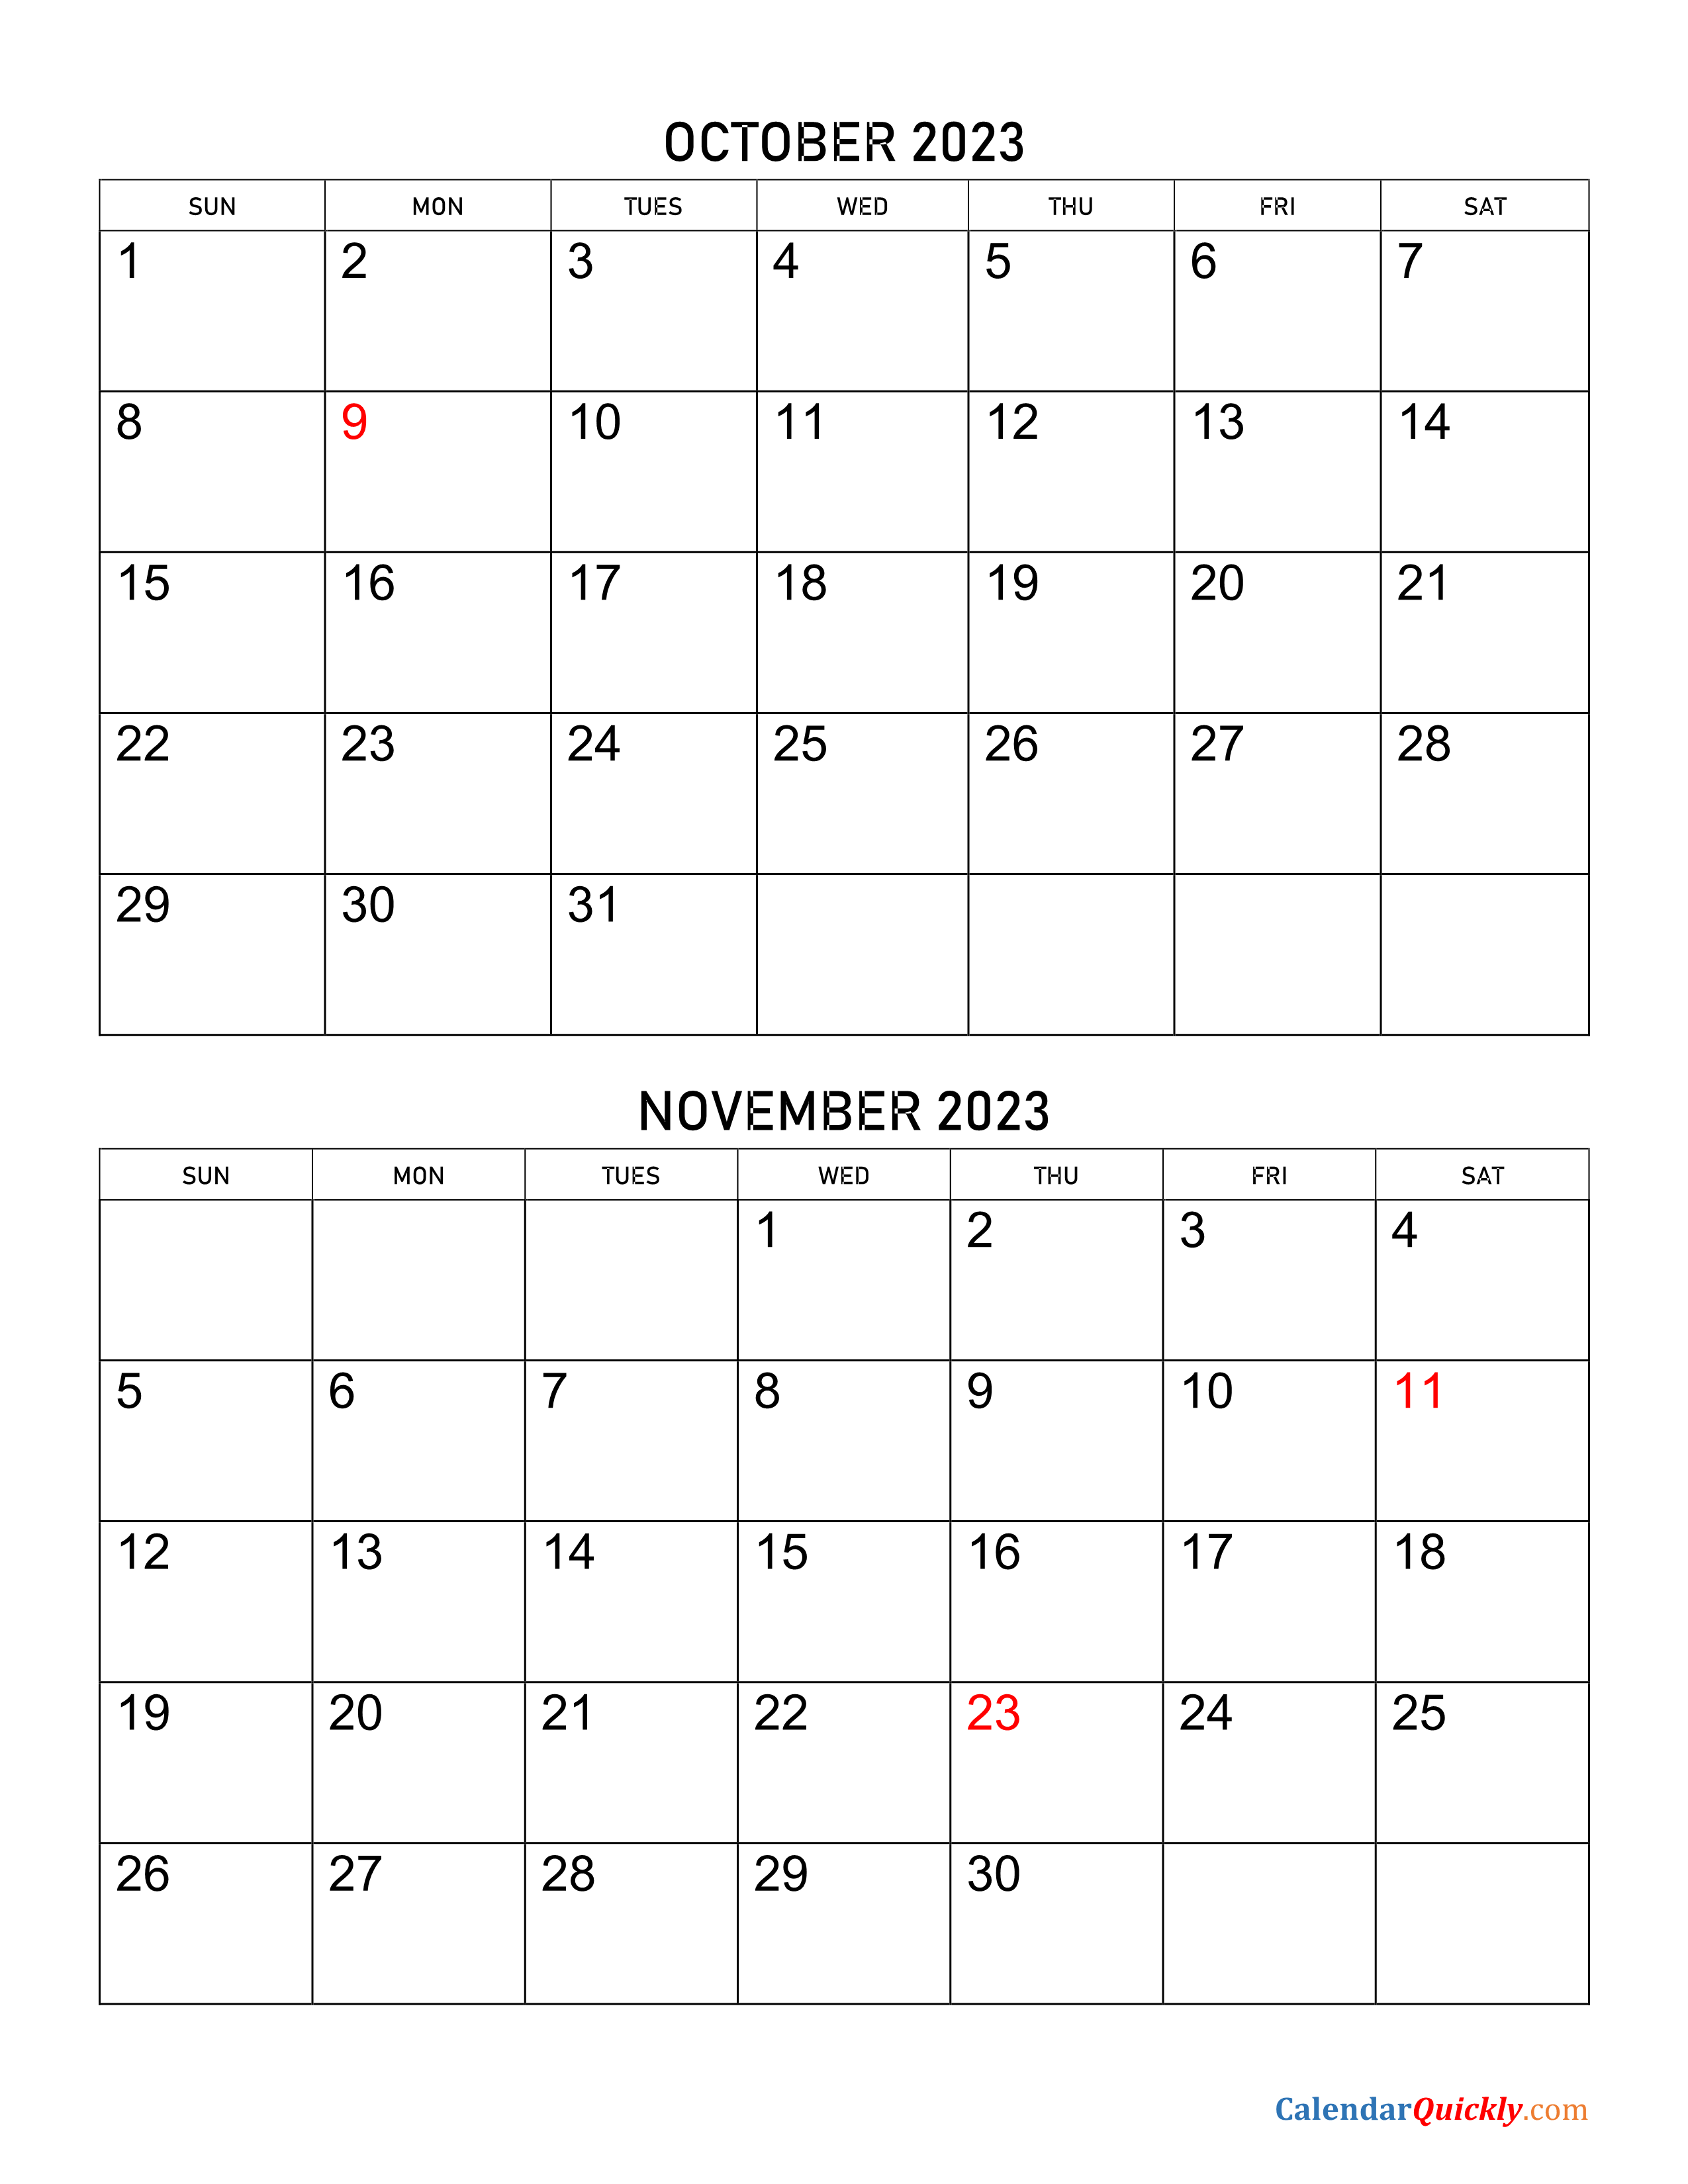 october-and-november-2023-calendar-calendar-quickly